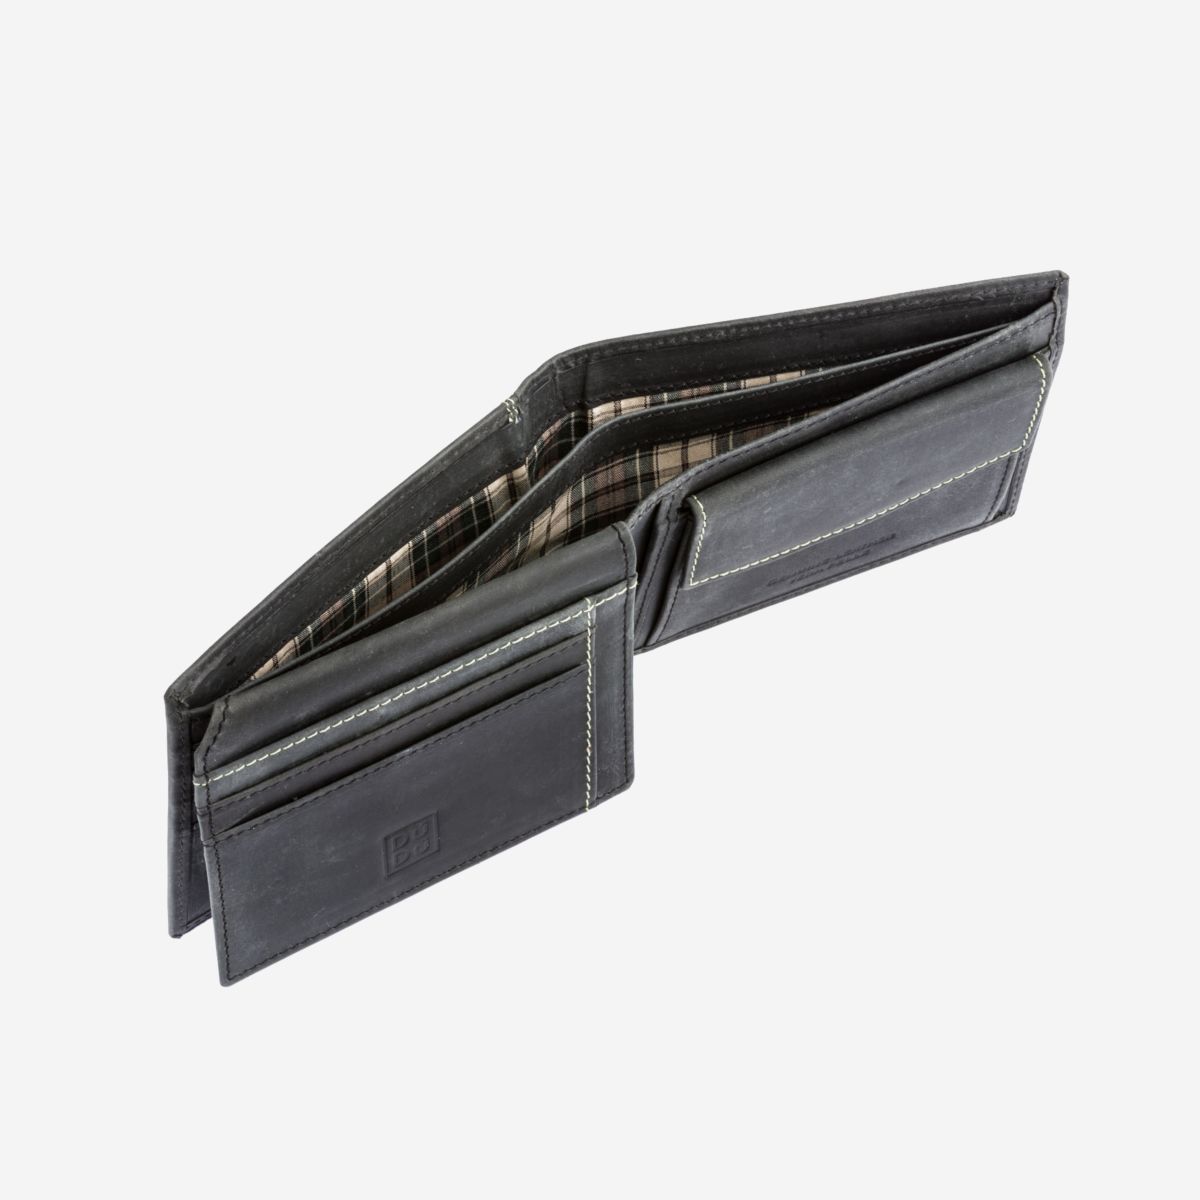 DuDu Classic Mans Billfold Wallet with Coin Pocket - Black